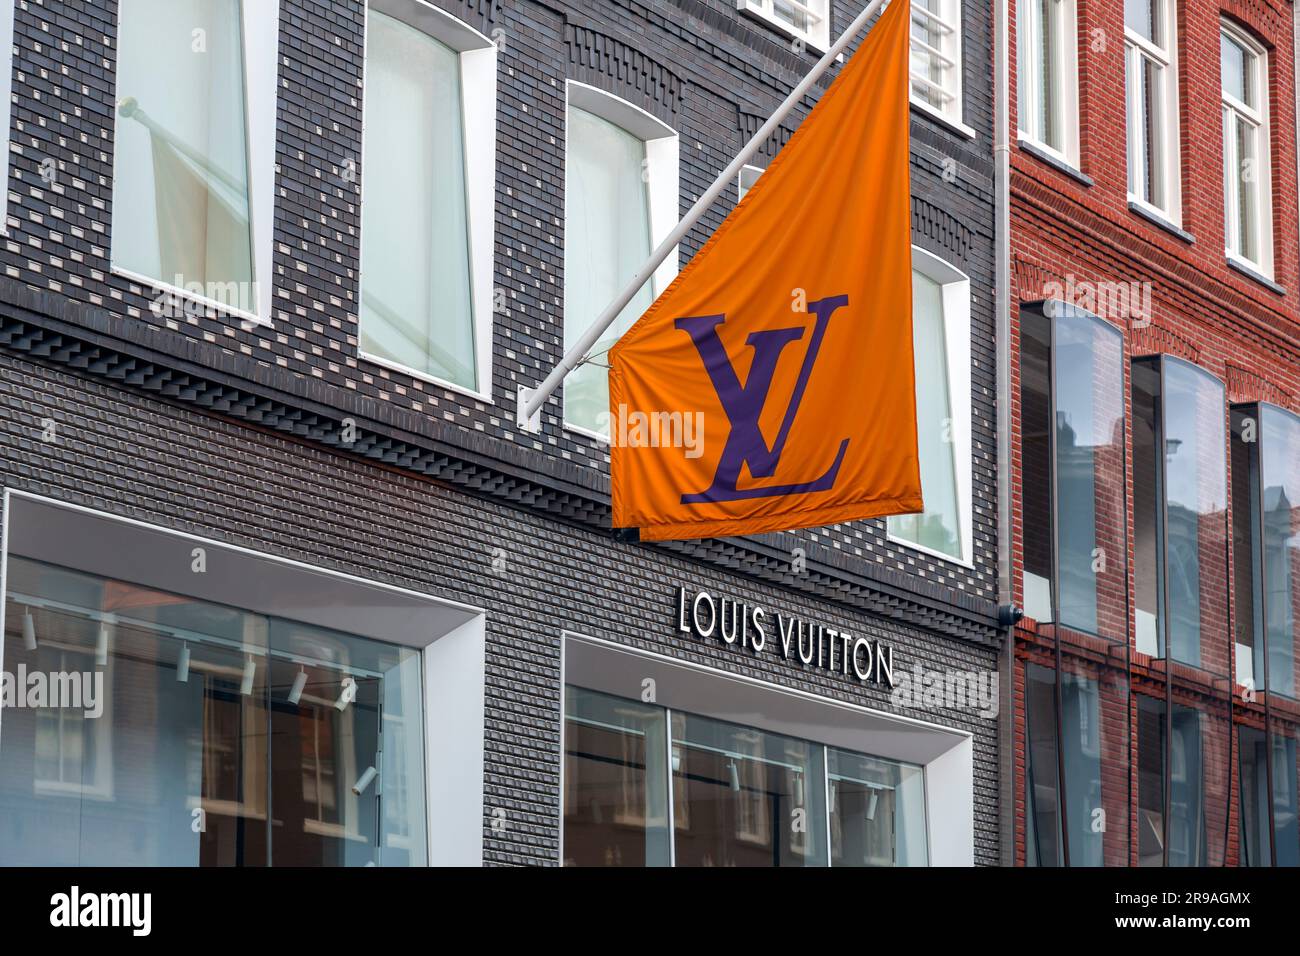 Amsterdam: Louis Vuitton pop-up store